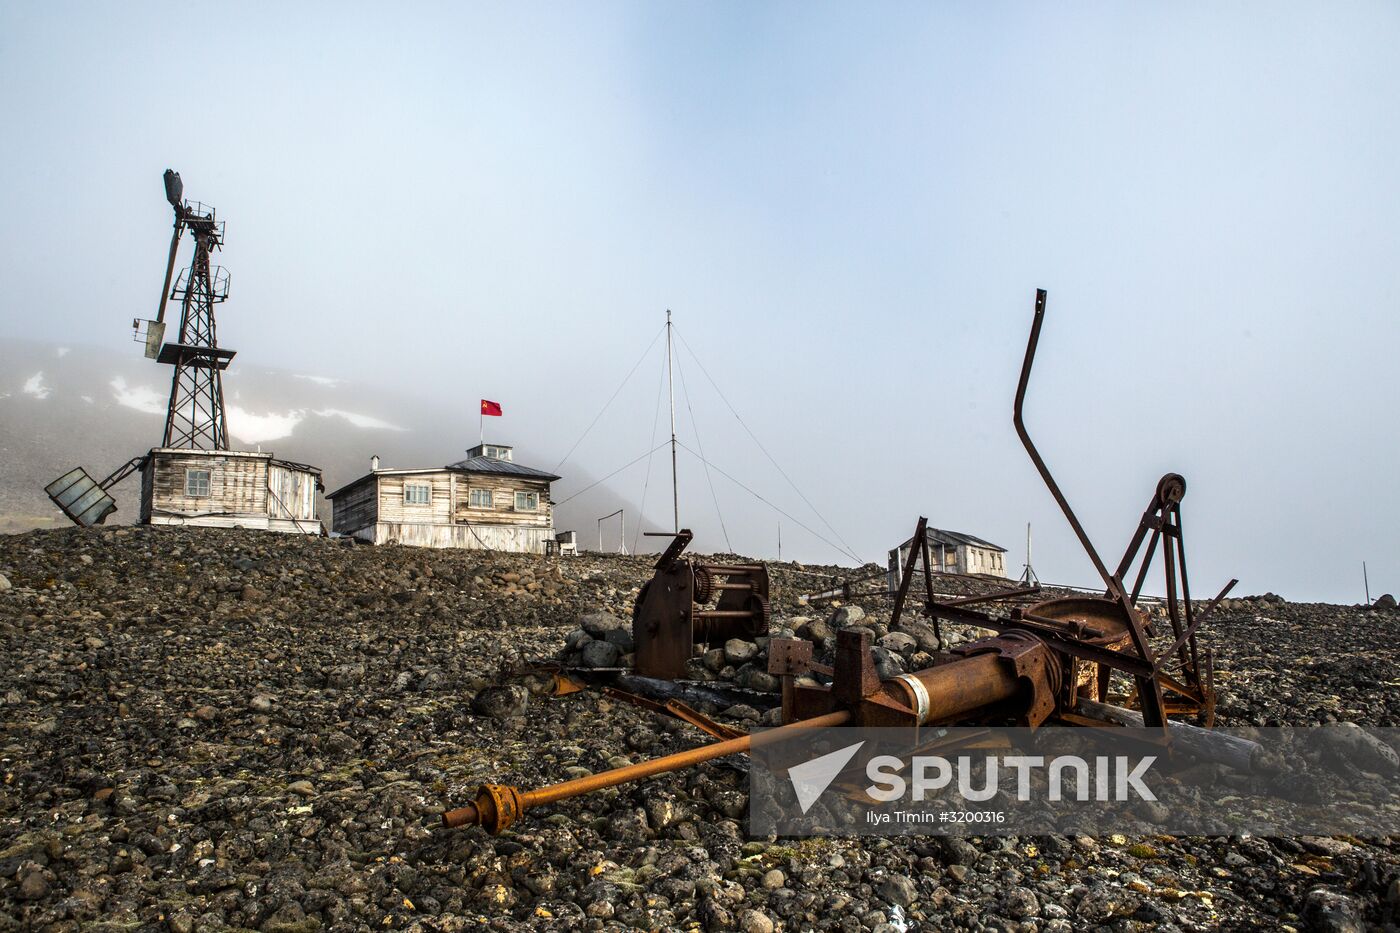 Tikhaya Bay polar station on Hooker Island, part of Franz Josef Land archipelago